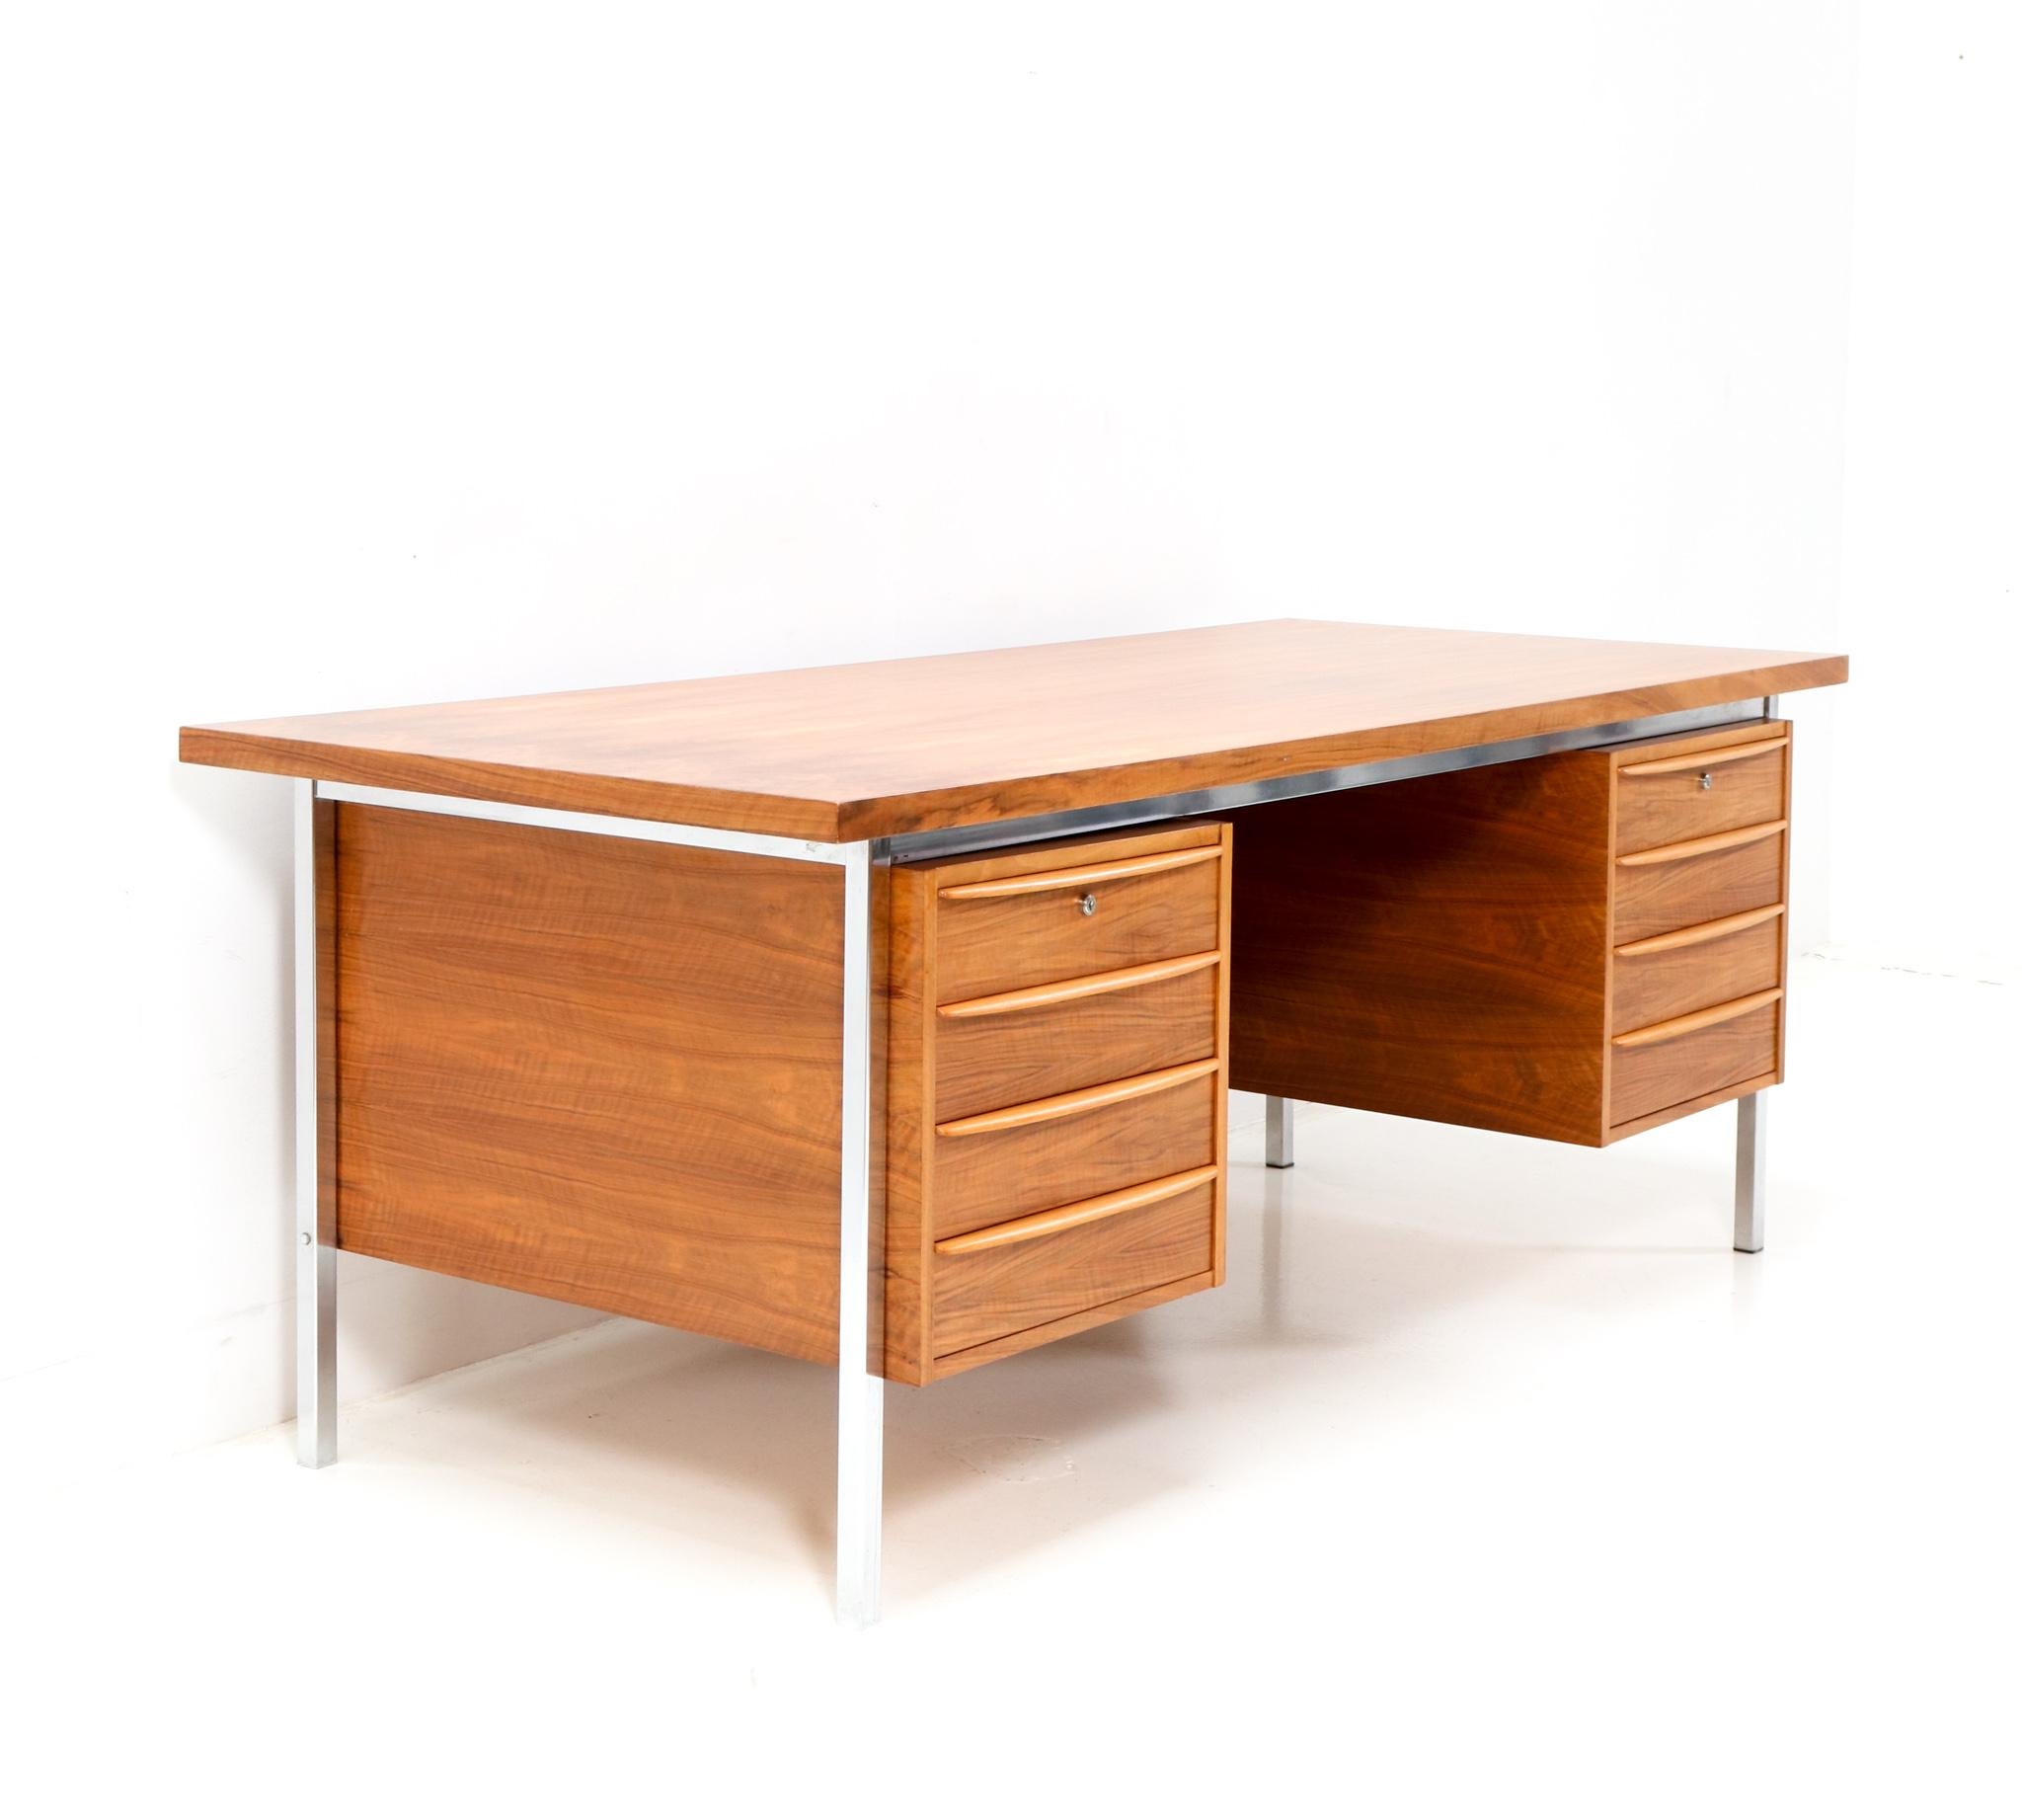 Mid-20th Century Mid-Century Modern Executive Desk by Salomonson & Tempelman for AP Originals